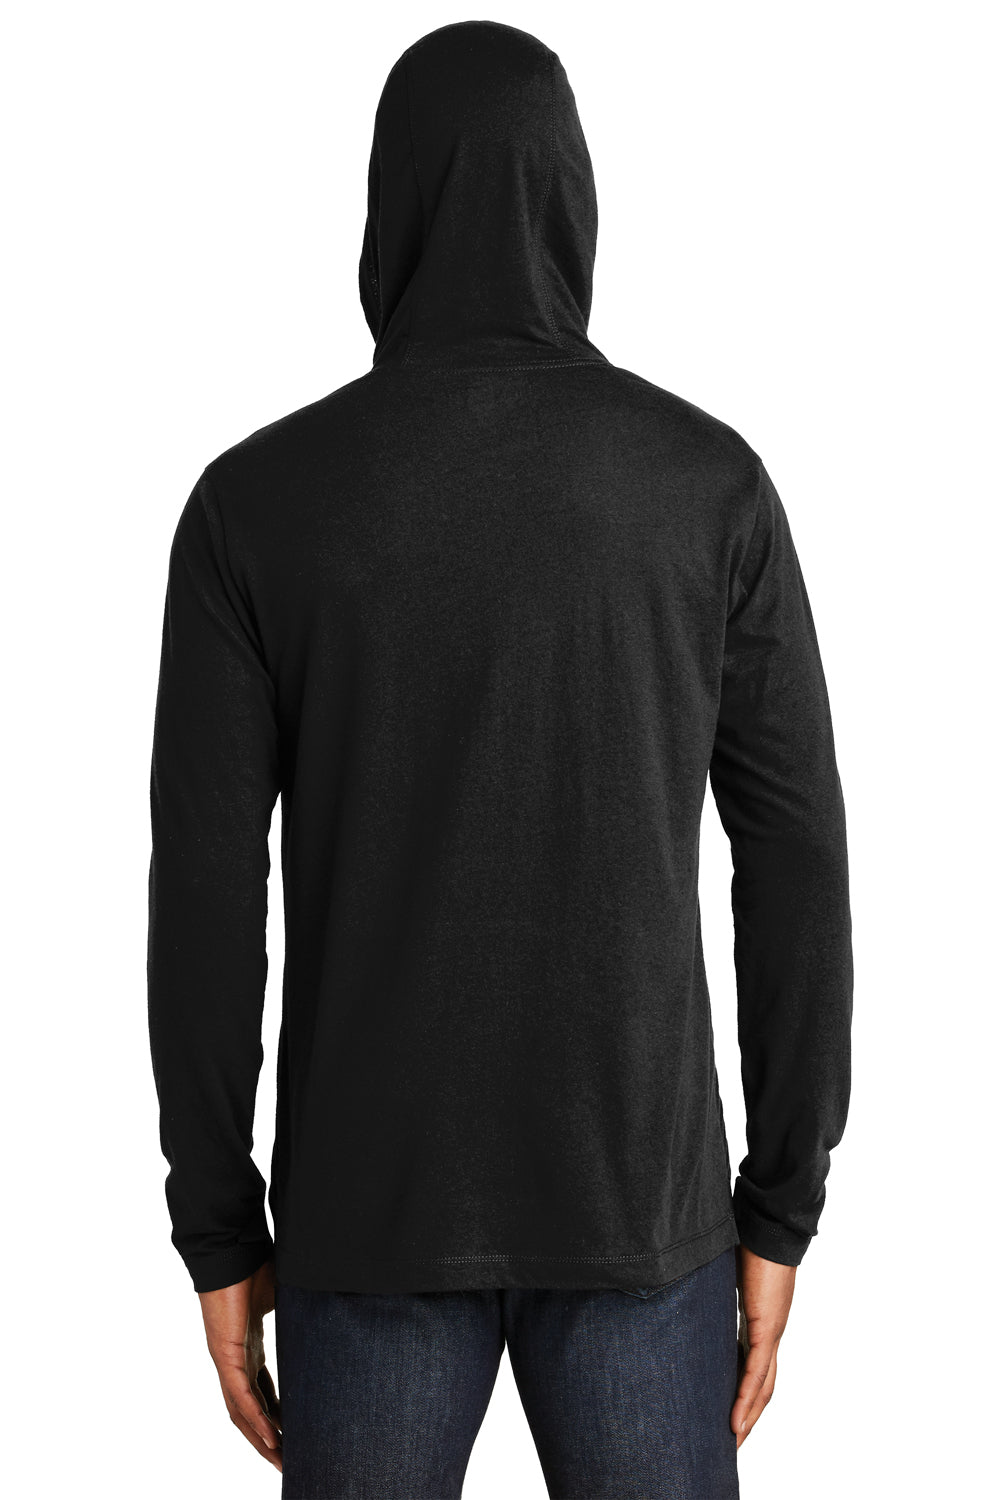 New Era NEA131 Mens Performance Moisture Wicking Long Sleeve Hooded T-Shirt Hoodie Black Back